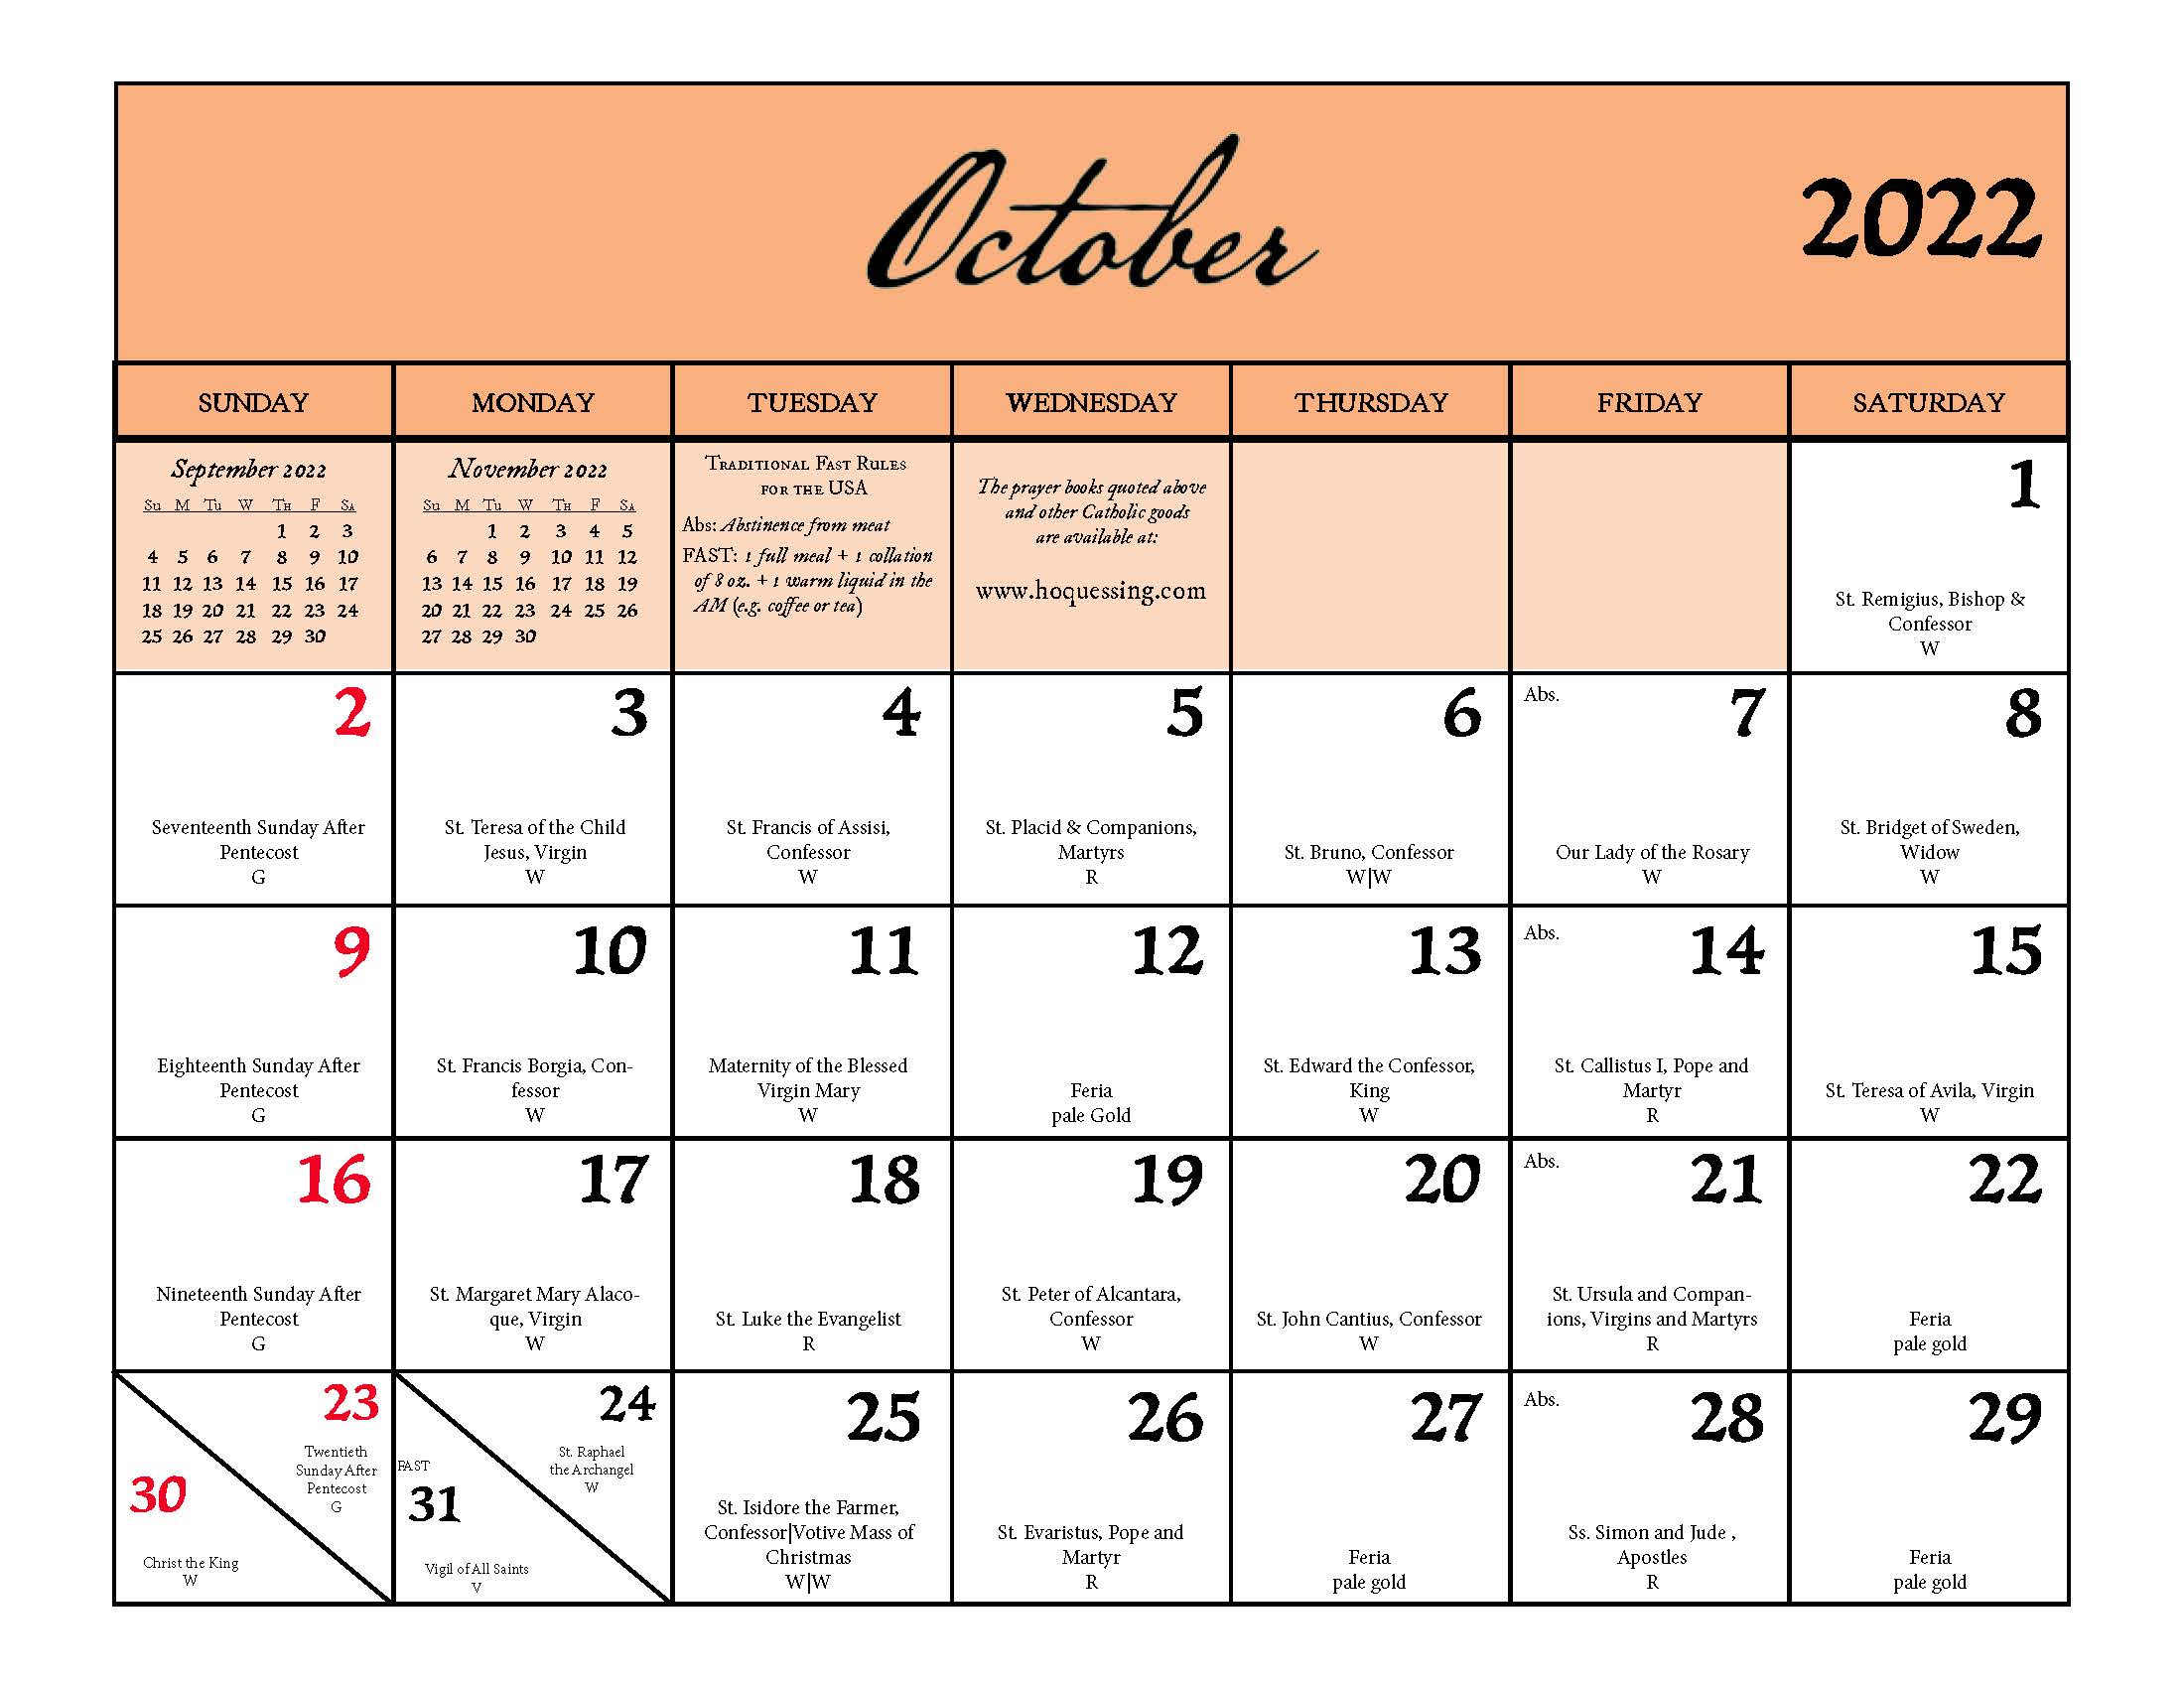 Ancilla Press 2022 Calendar